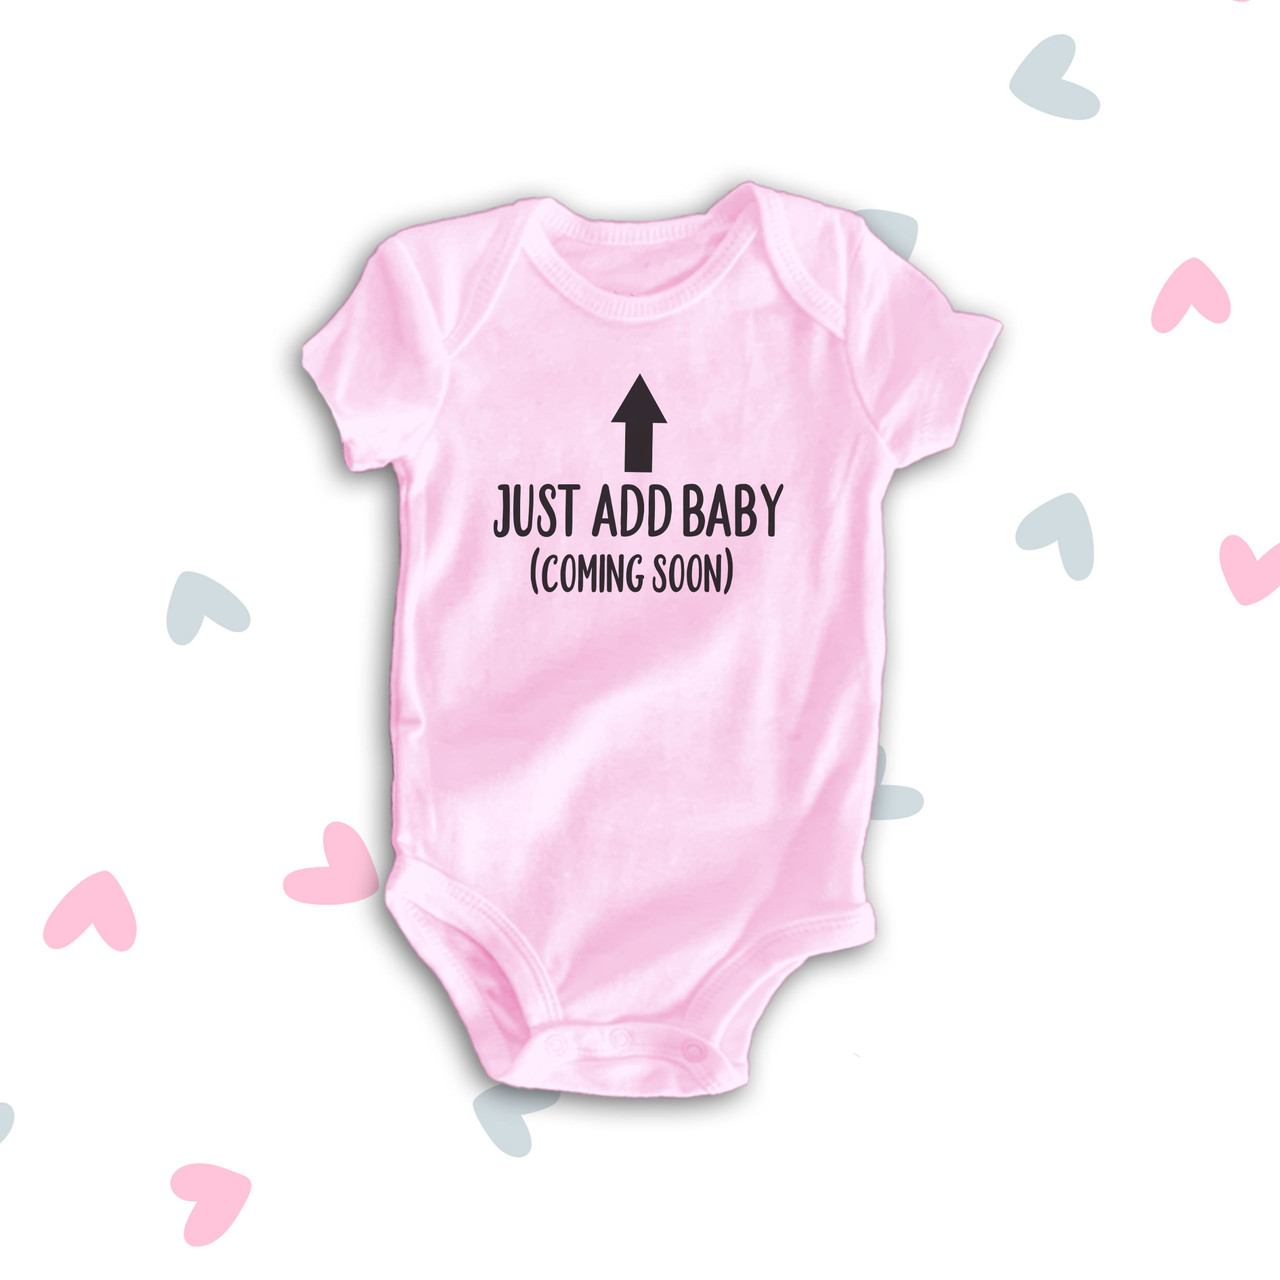 pregnancy announcement bodysuit, coming soon add baby onesie